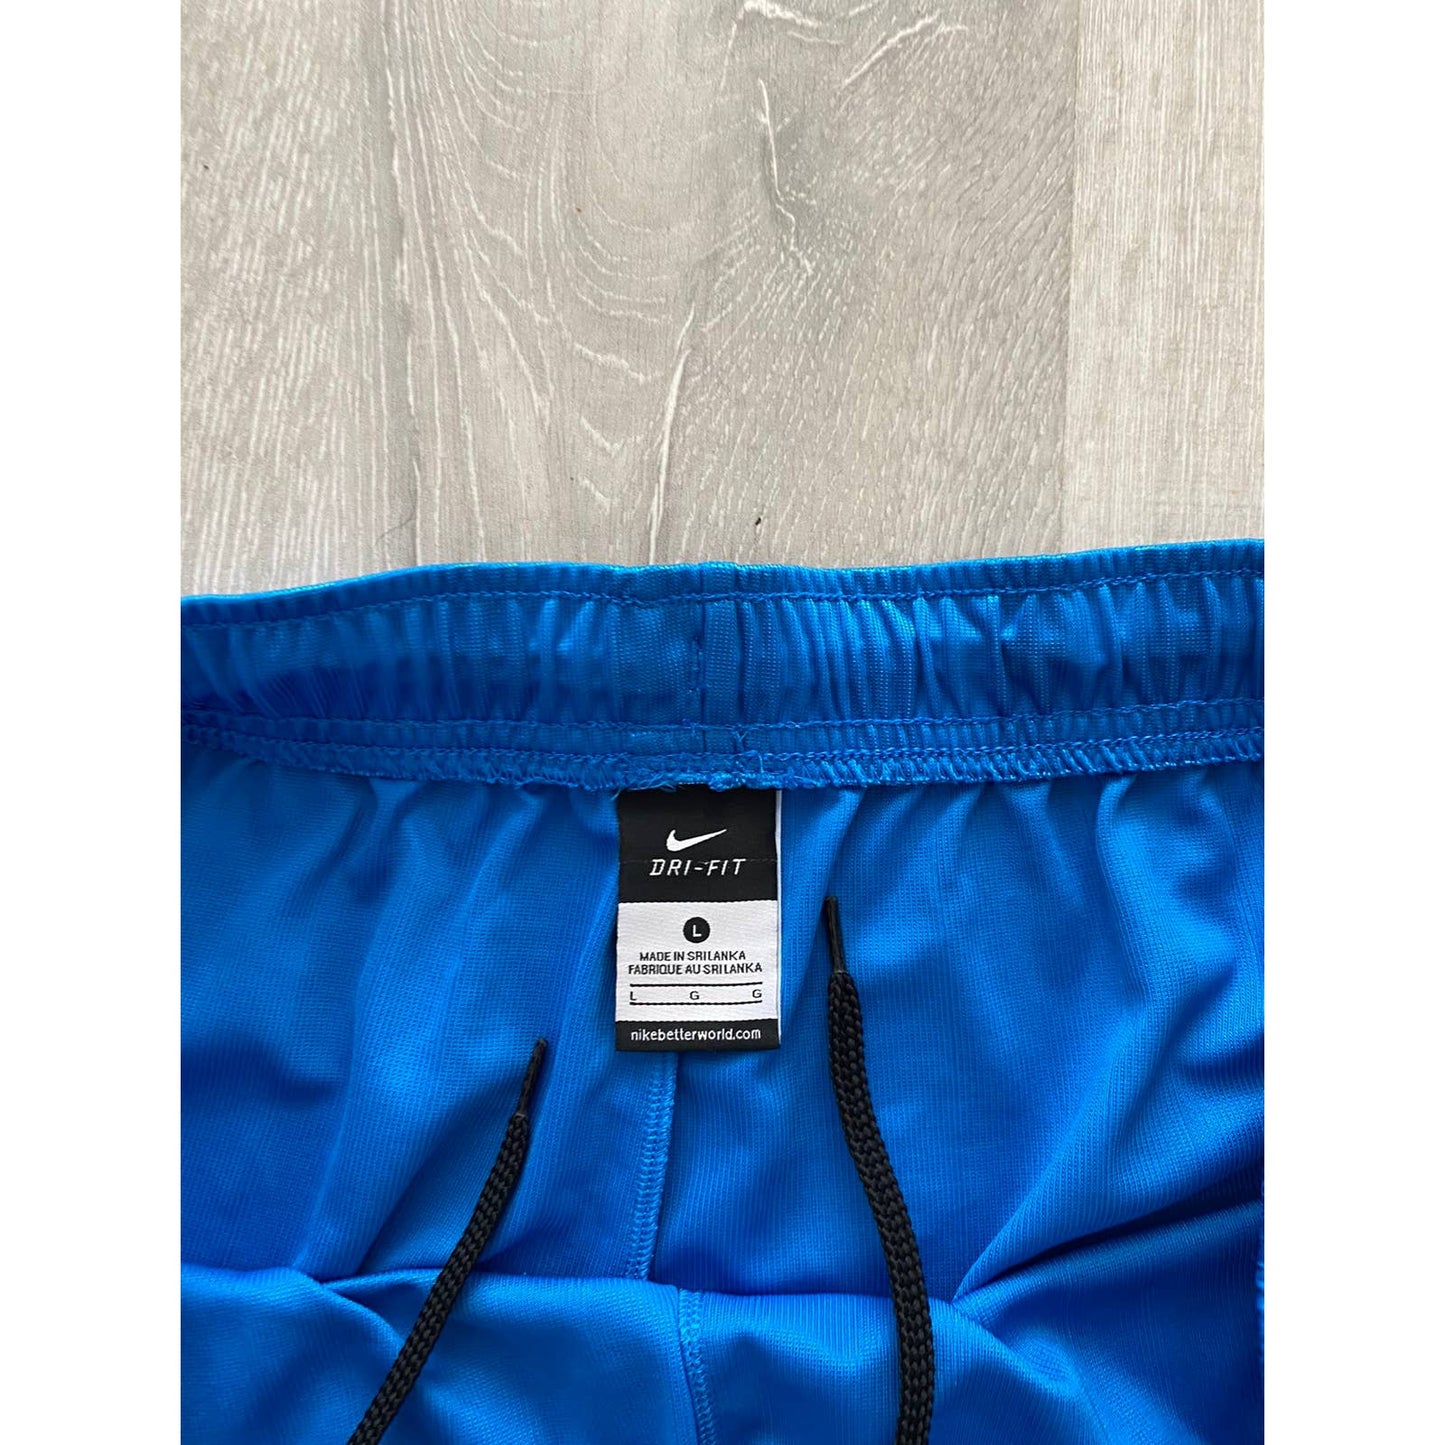 Nike vintage blue shorts track pant small swoosh